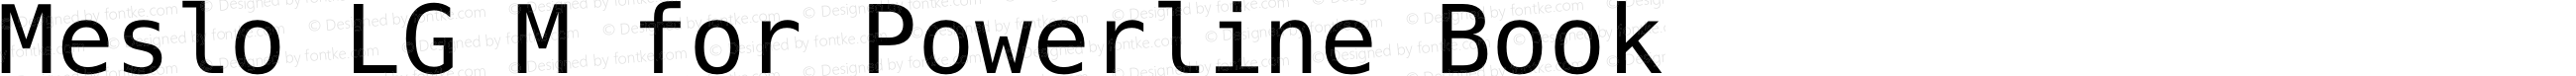 Meslo LG M Regular for Powerline Nerd Font Plus Font Awesome Plus Pomicons